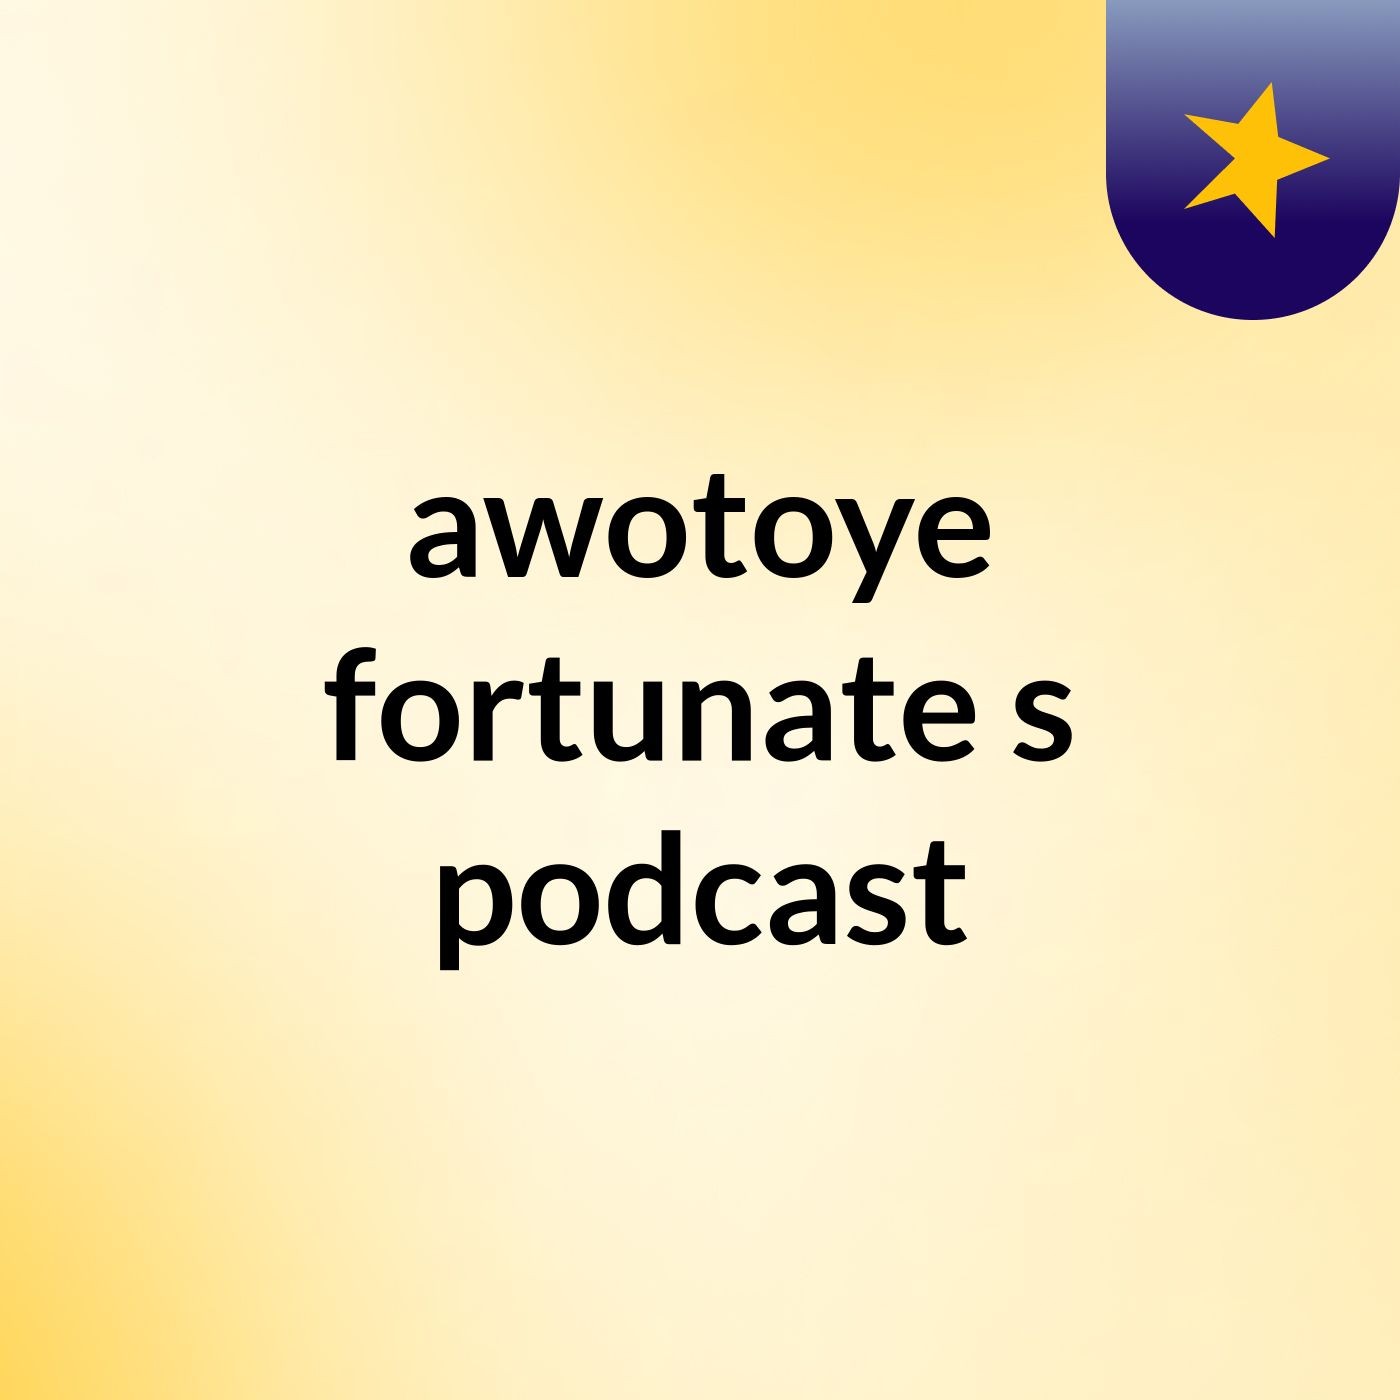 Episode 2 - awotoye fortunate's podcast